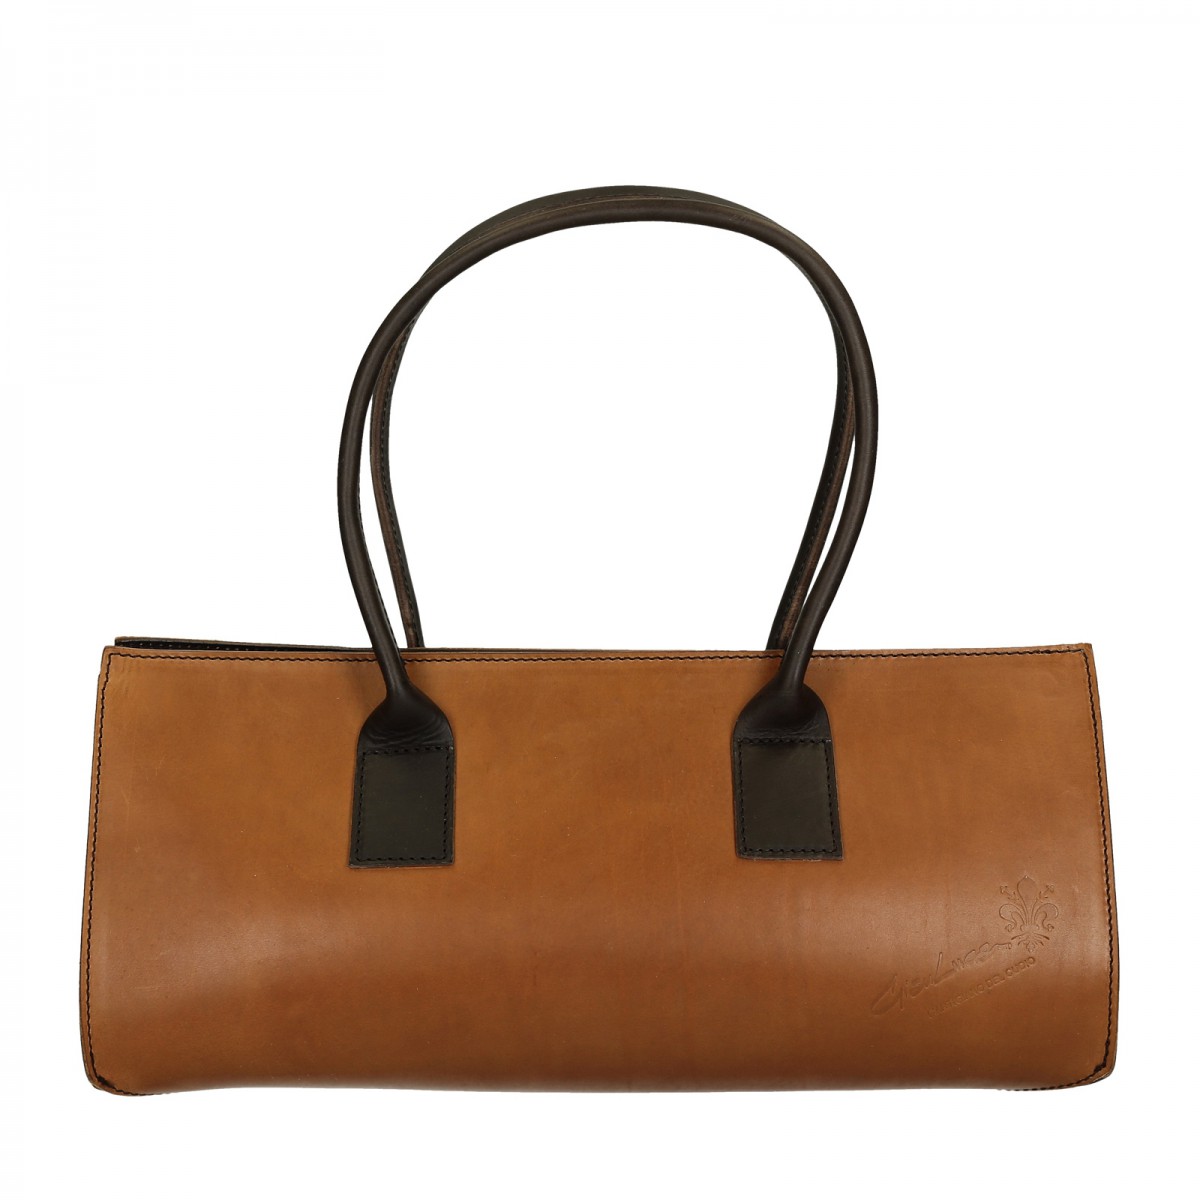 Italian leather handbag for women Handmade in Italy | Gianluca - The leather craftsman